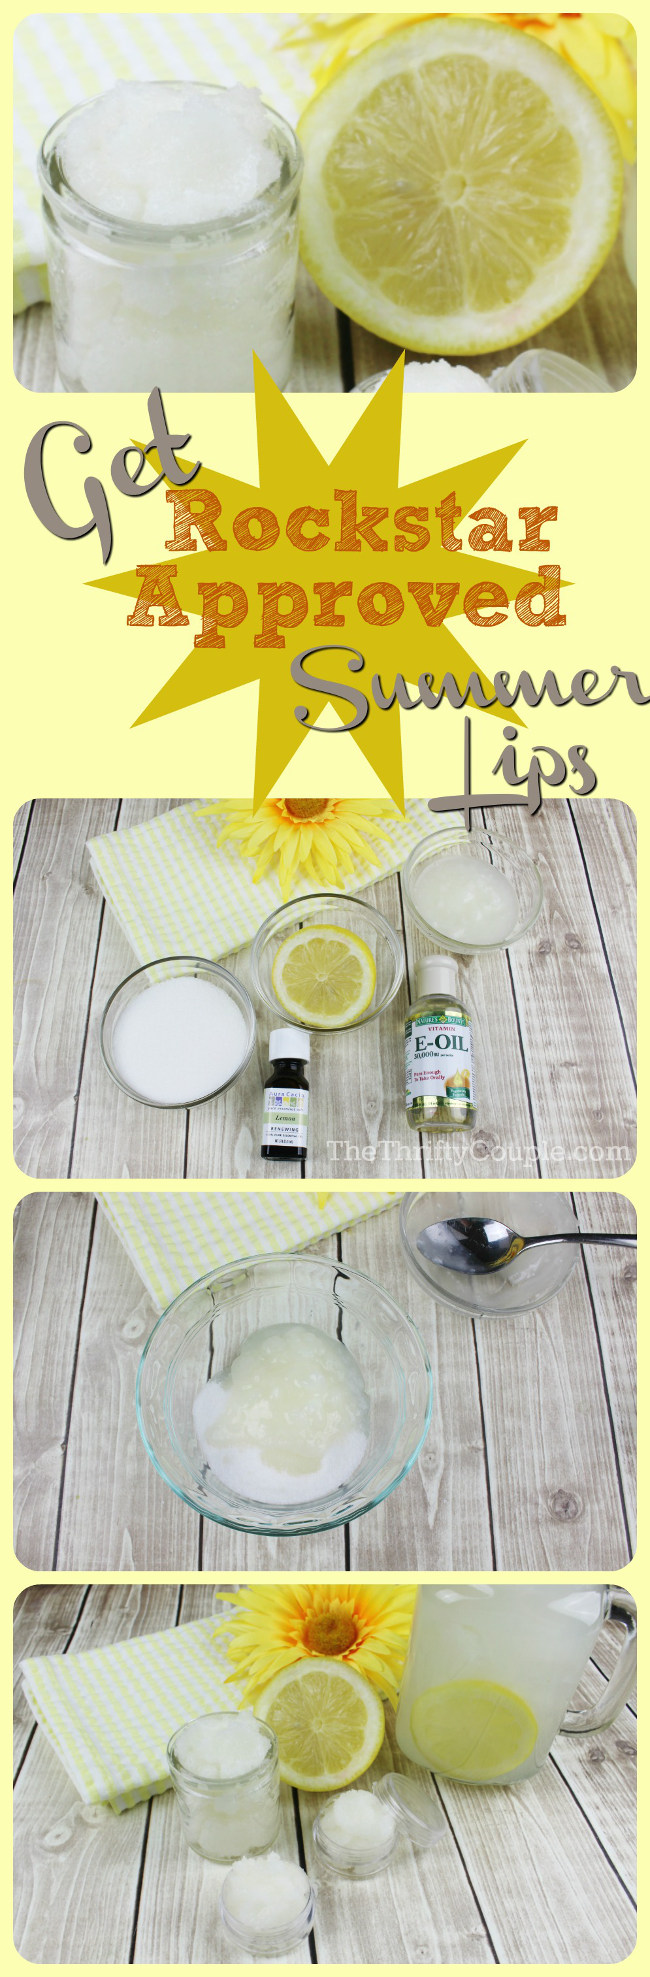 Rockstar-approved-summer-lips-lemonade-sugar-lip-scrub-homemade-recipe-collage-diy